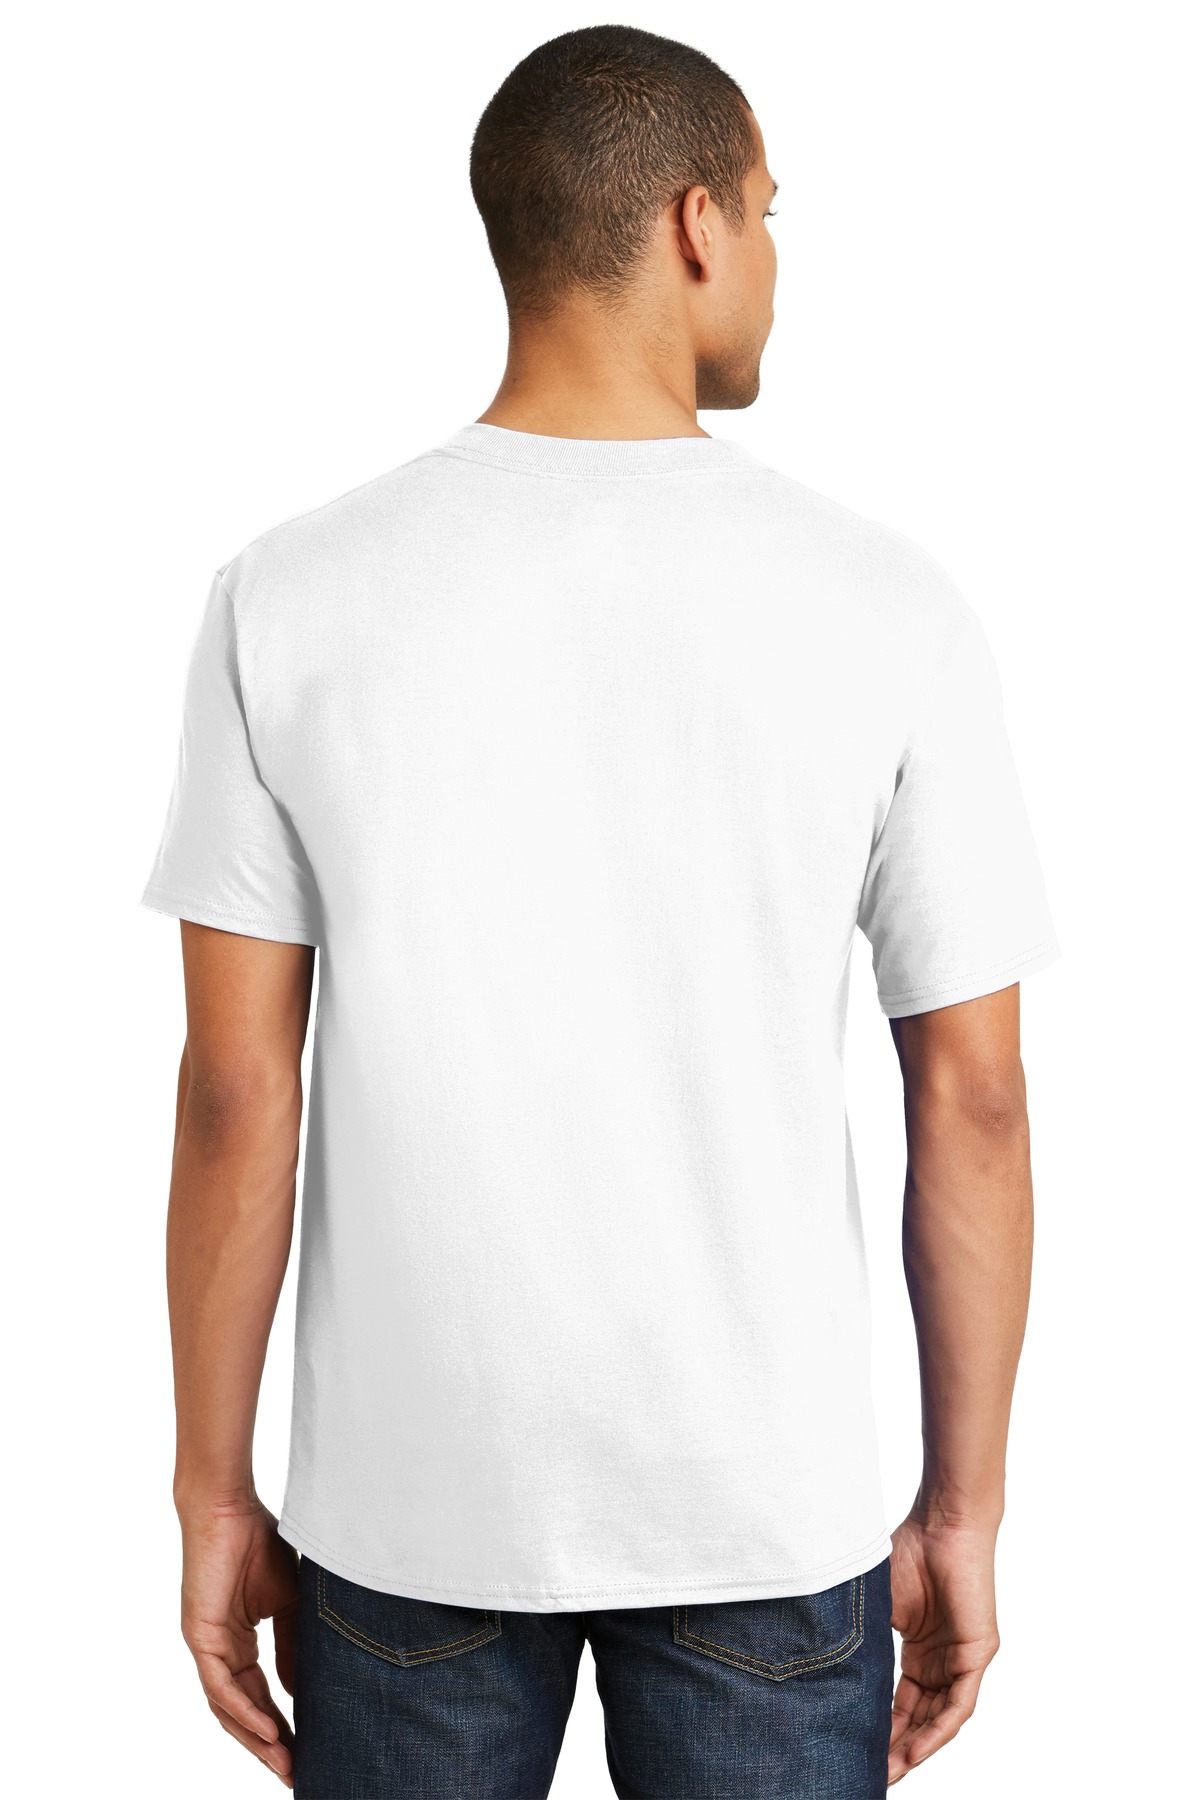 Hanes ® Beefy-T ® - 100% Cotton T-Shirt. 5180 - Custom Shirt Shop